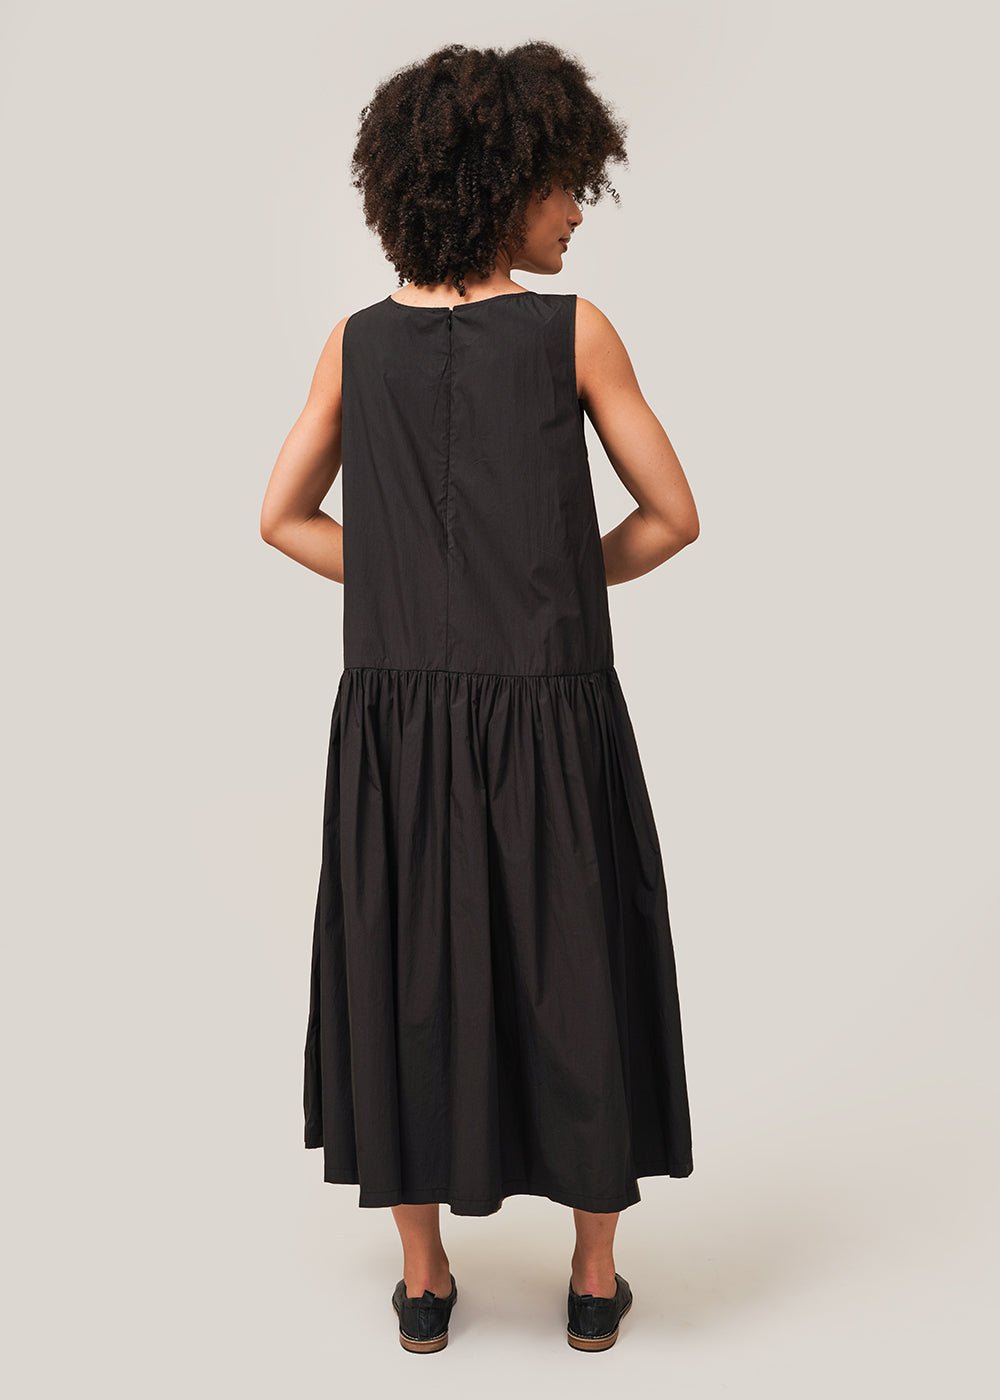 AMOMENTO Black Cotton Shirring Dress - New Classics Studios Sustainable Ethical Fashion Canada